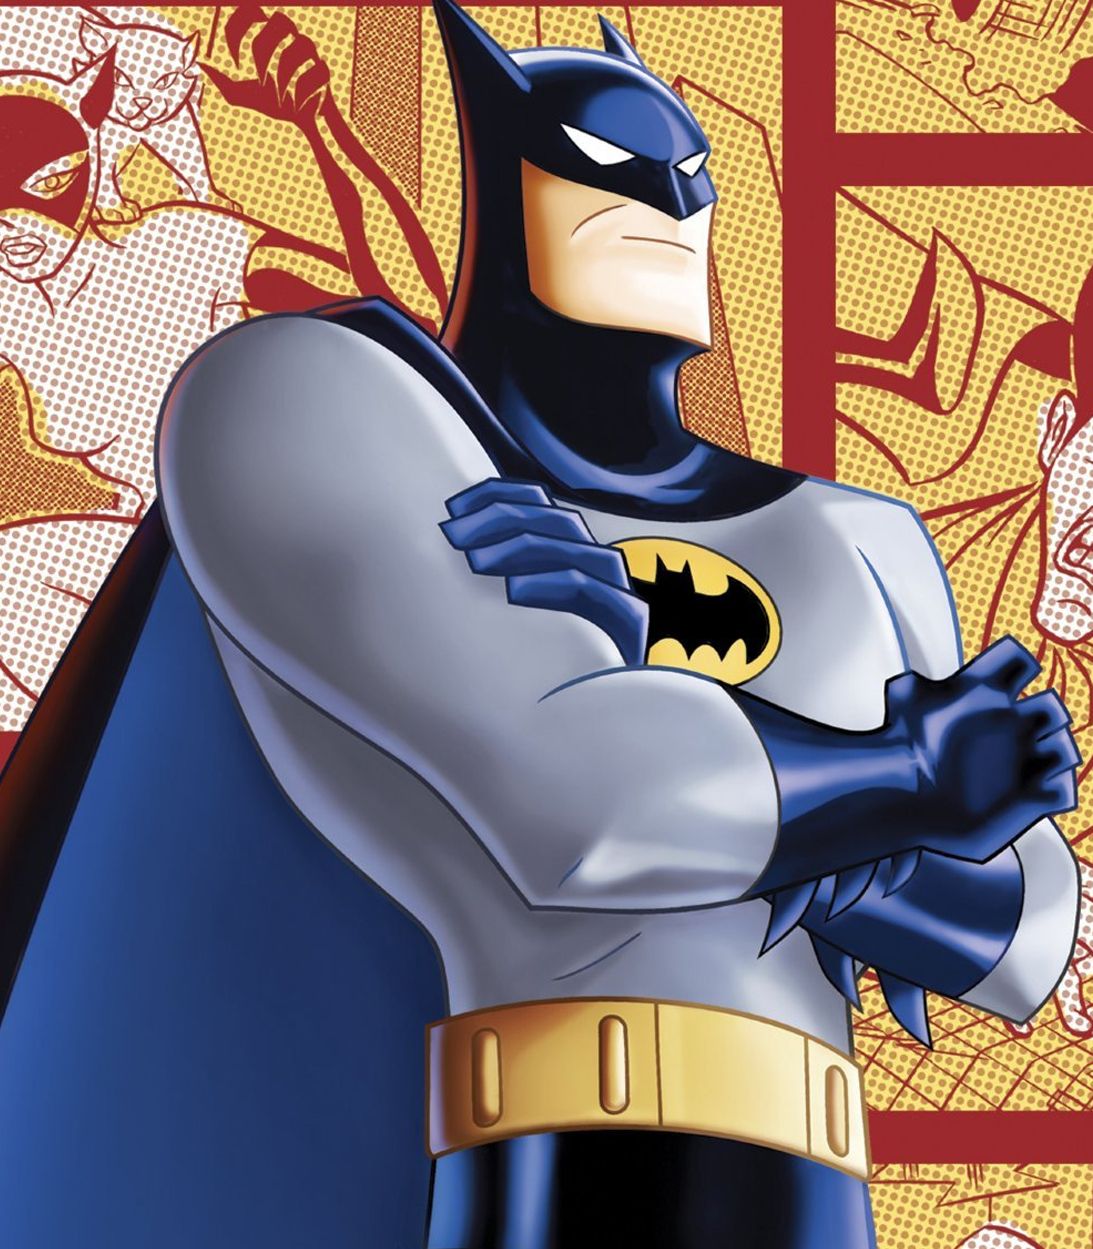 Batman The Animated Series Season 1 DVD Cover